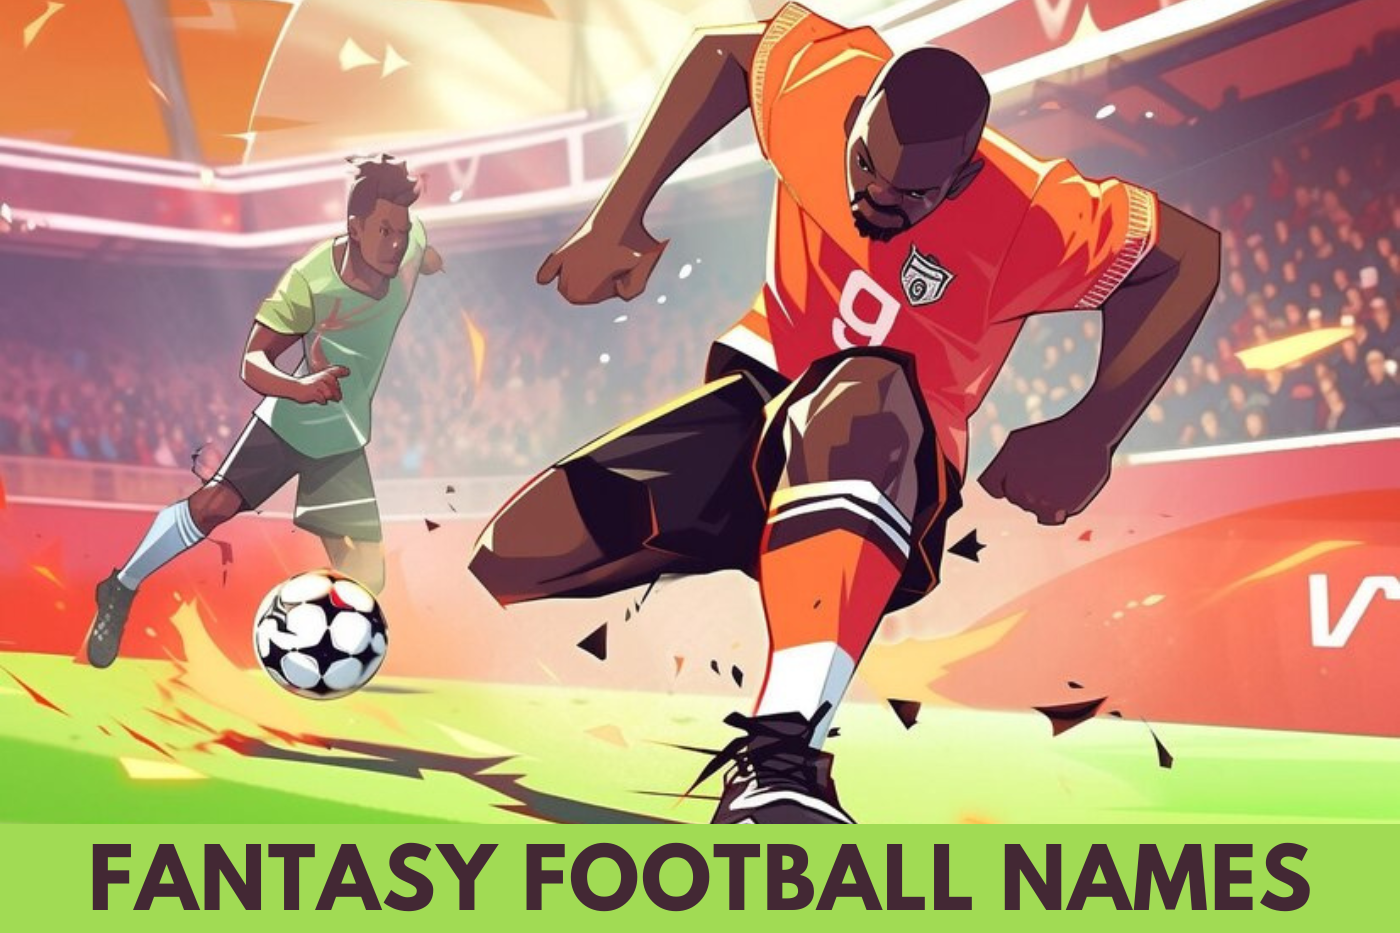 Fantasy football names